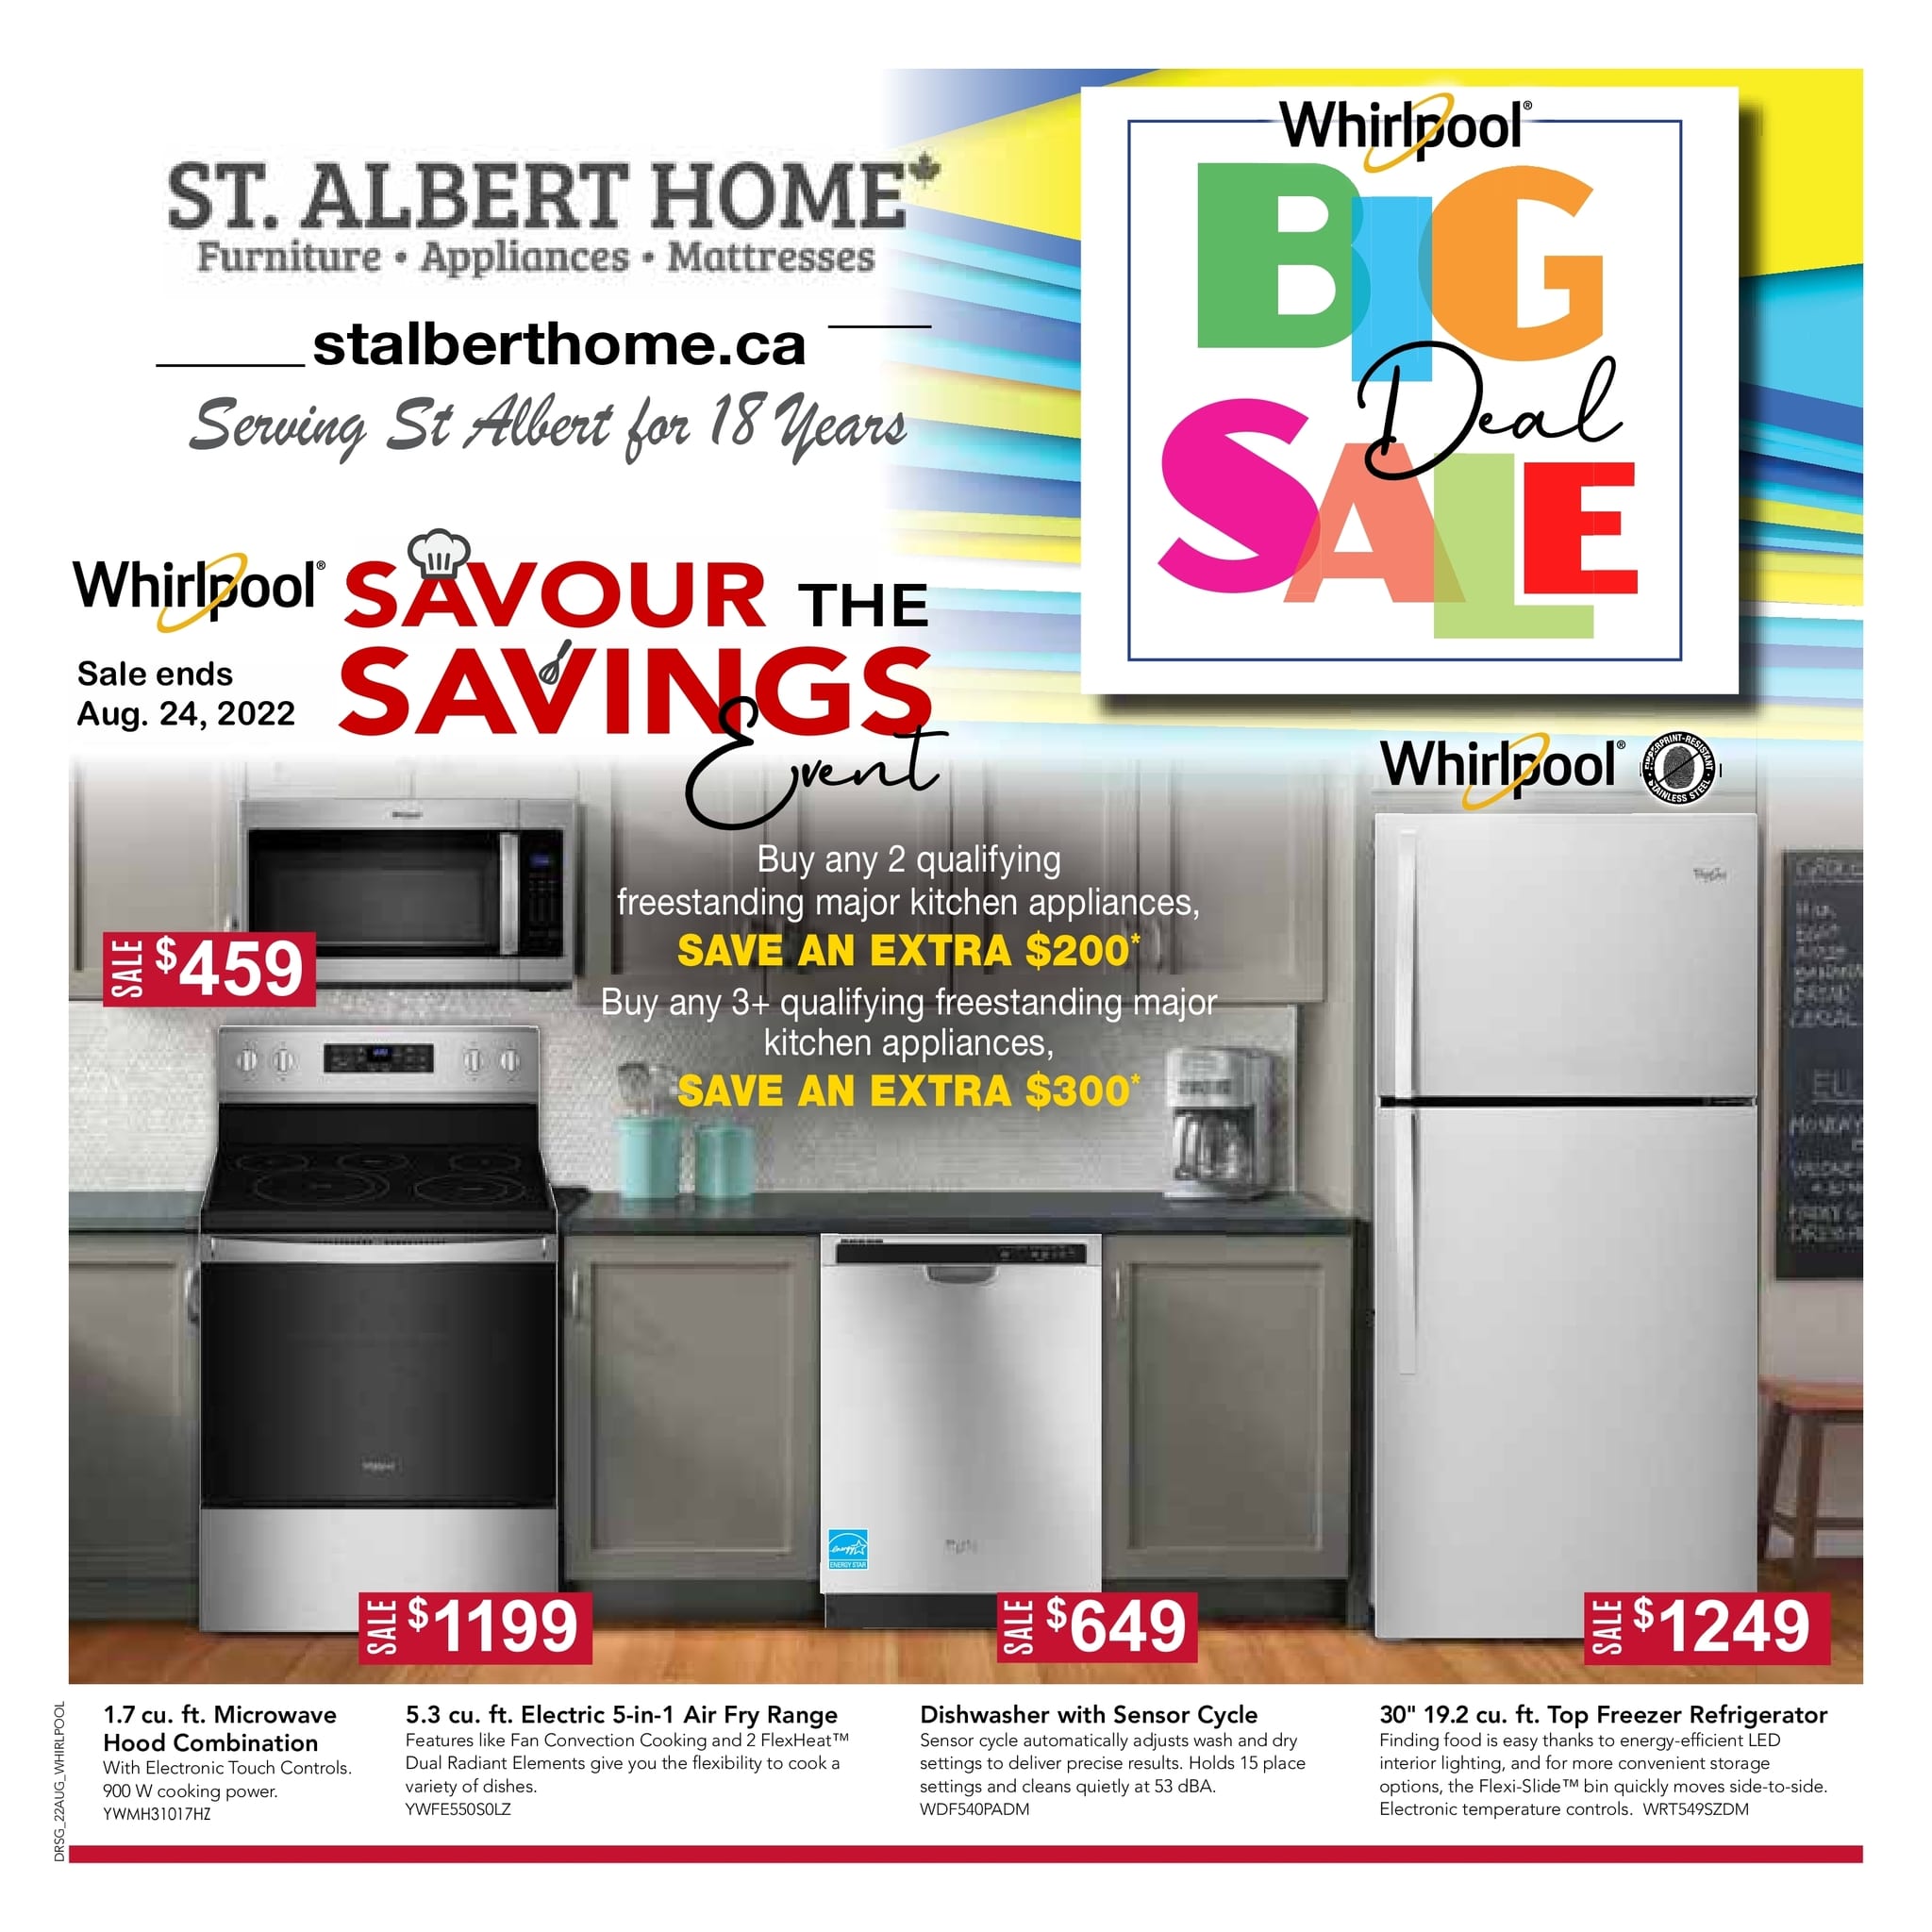 St. Albert Home - Big Deal Sale